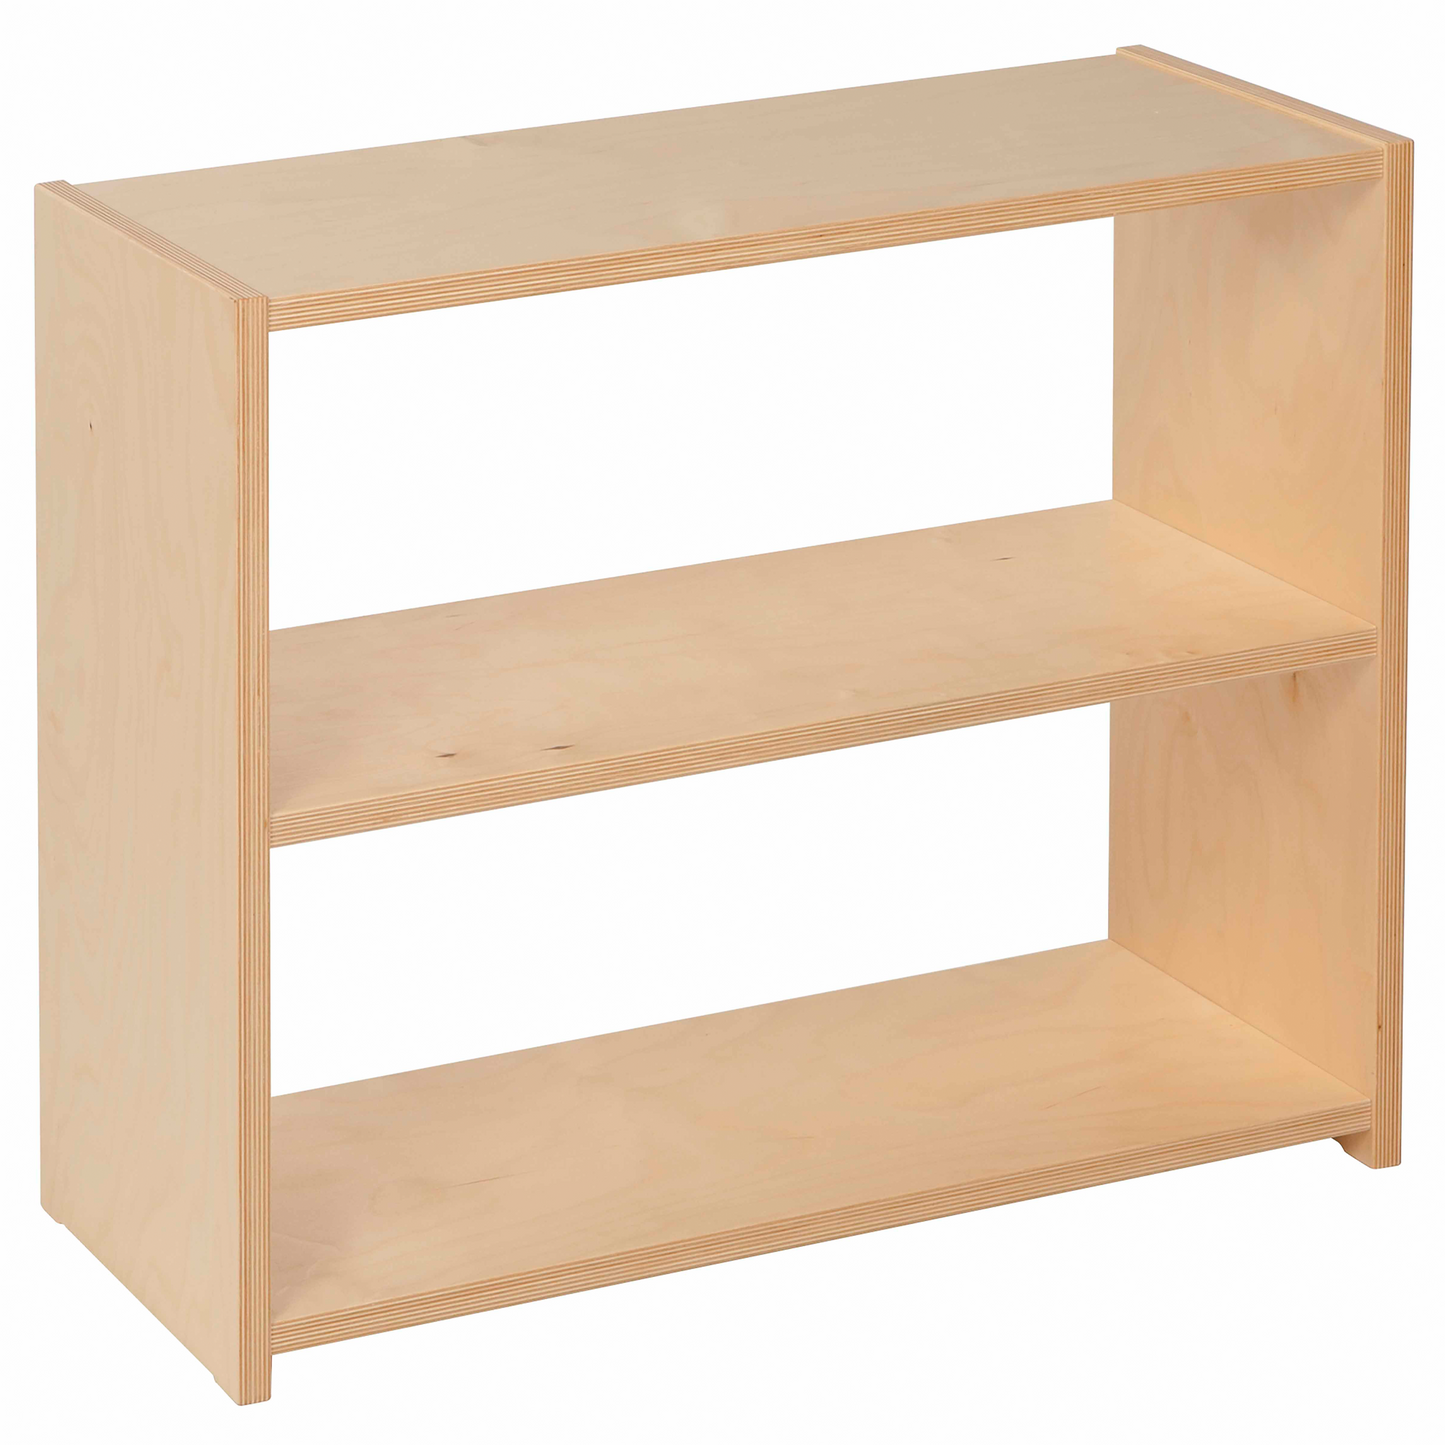 Children's shelf 2 levels - Nienhuis AMI